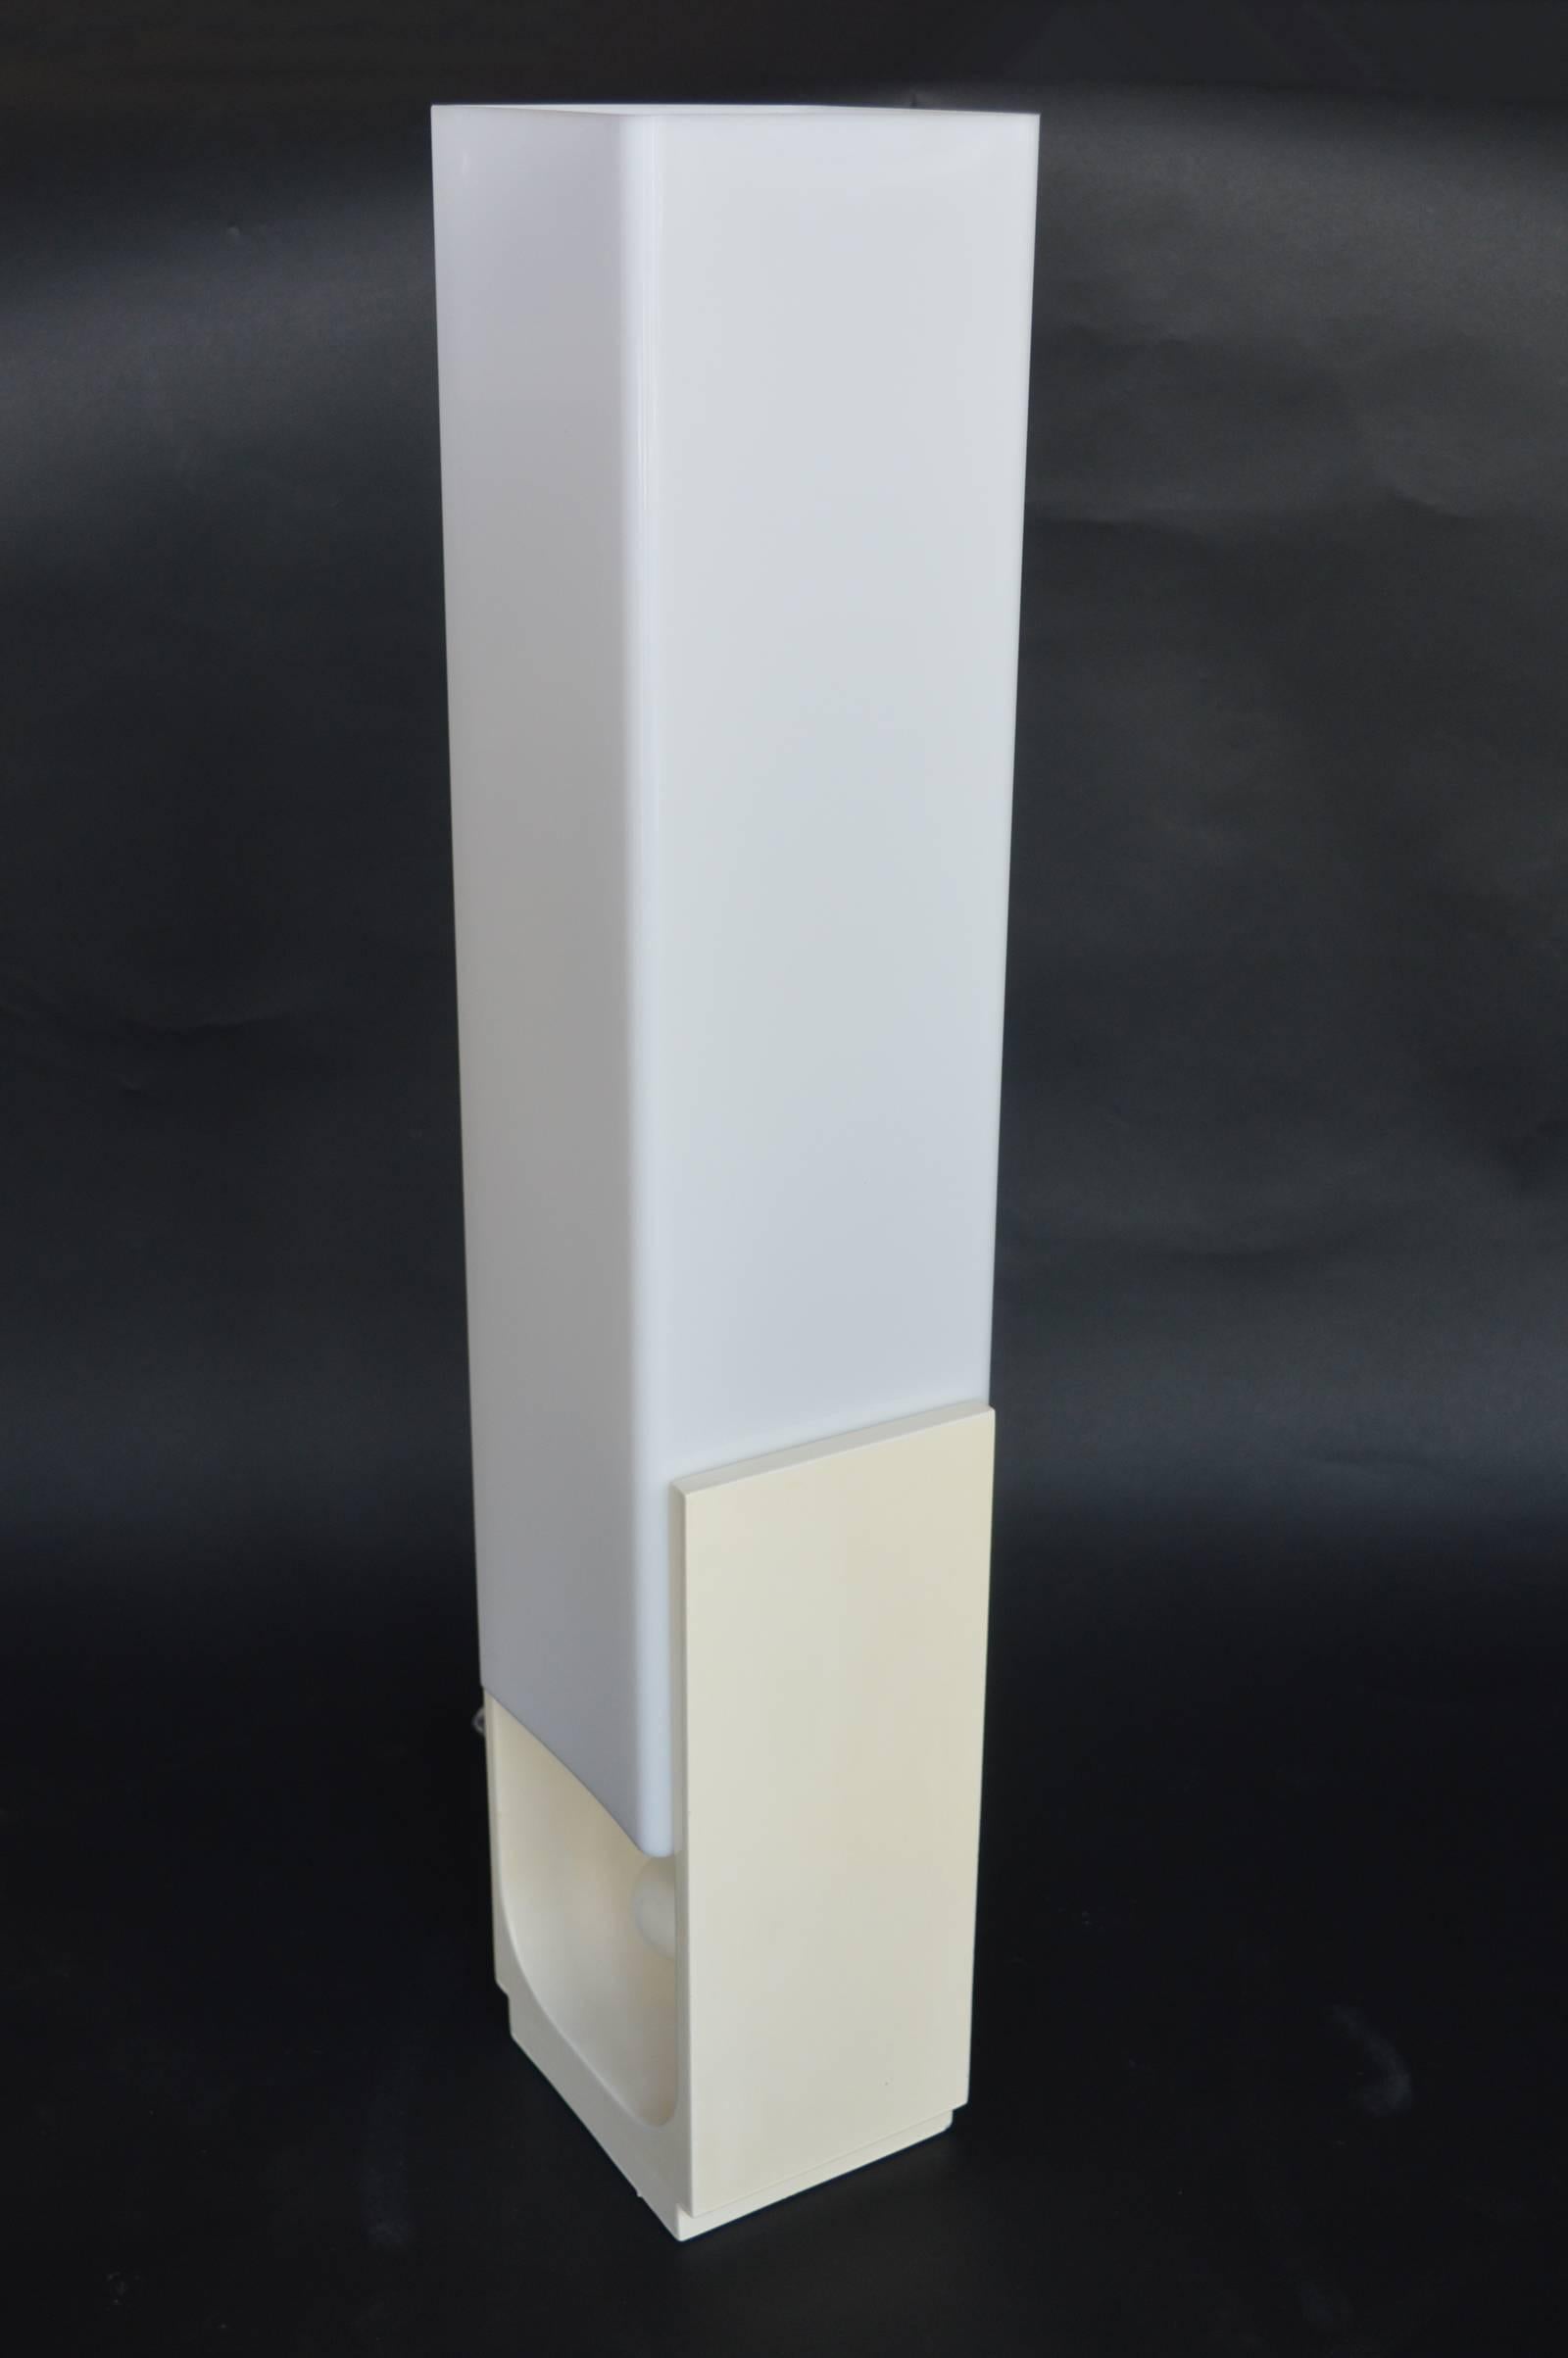 White lacquered wood base and white molded acrylic shade.